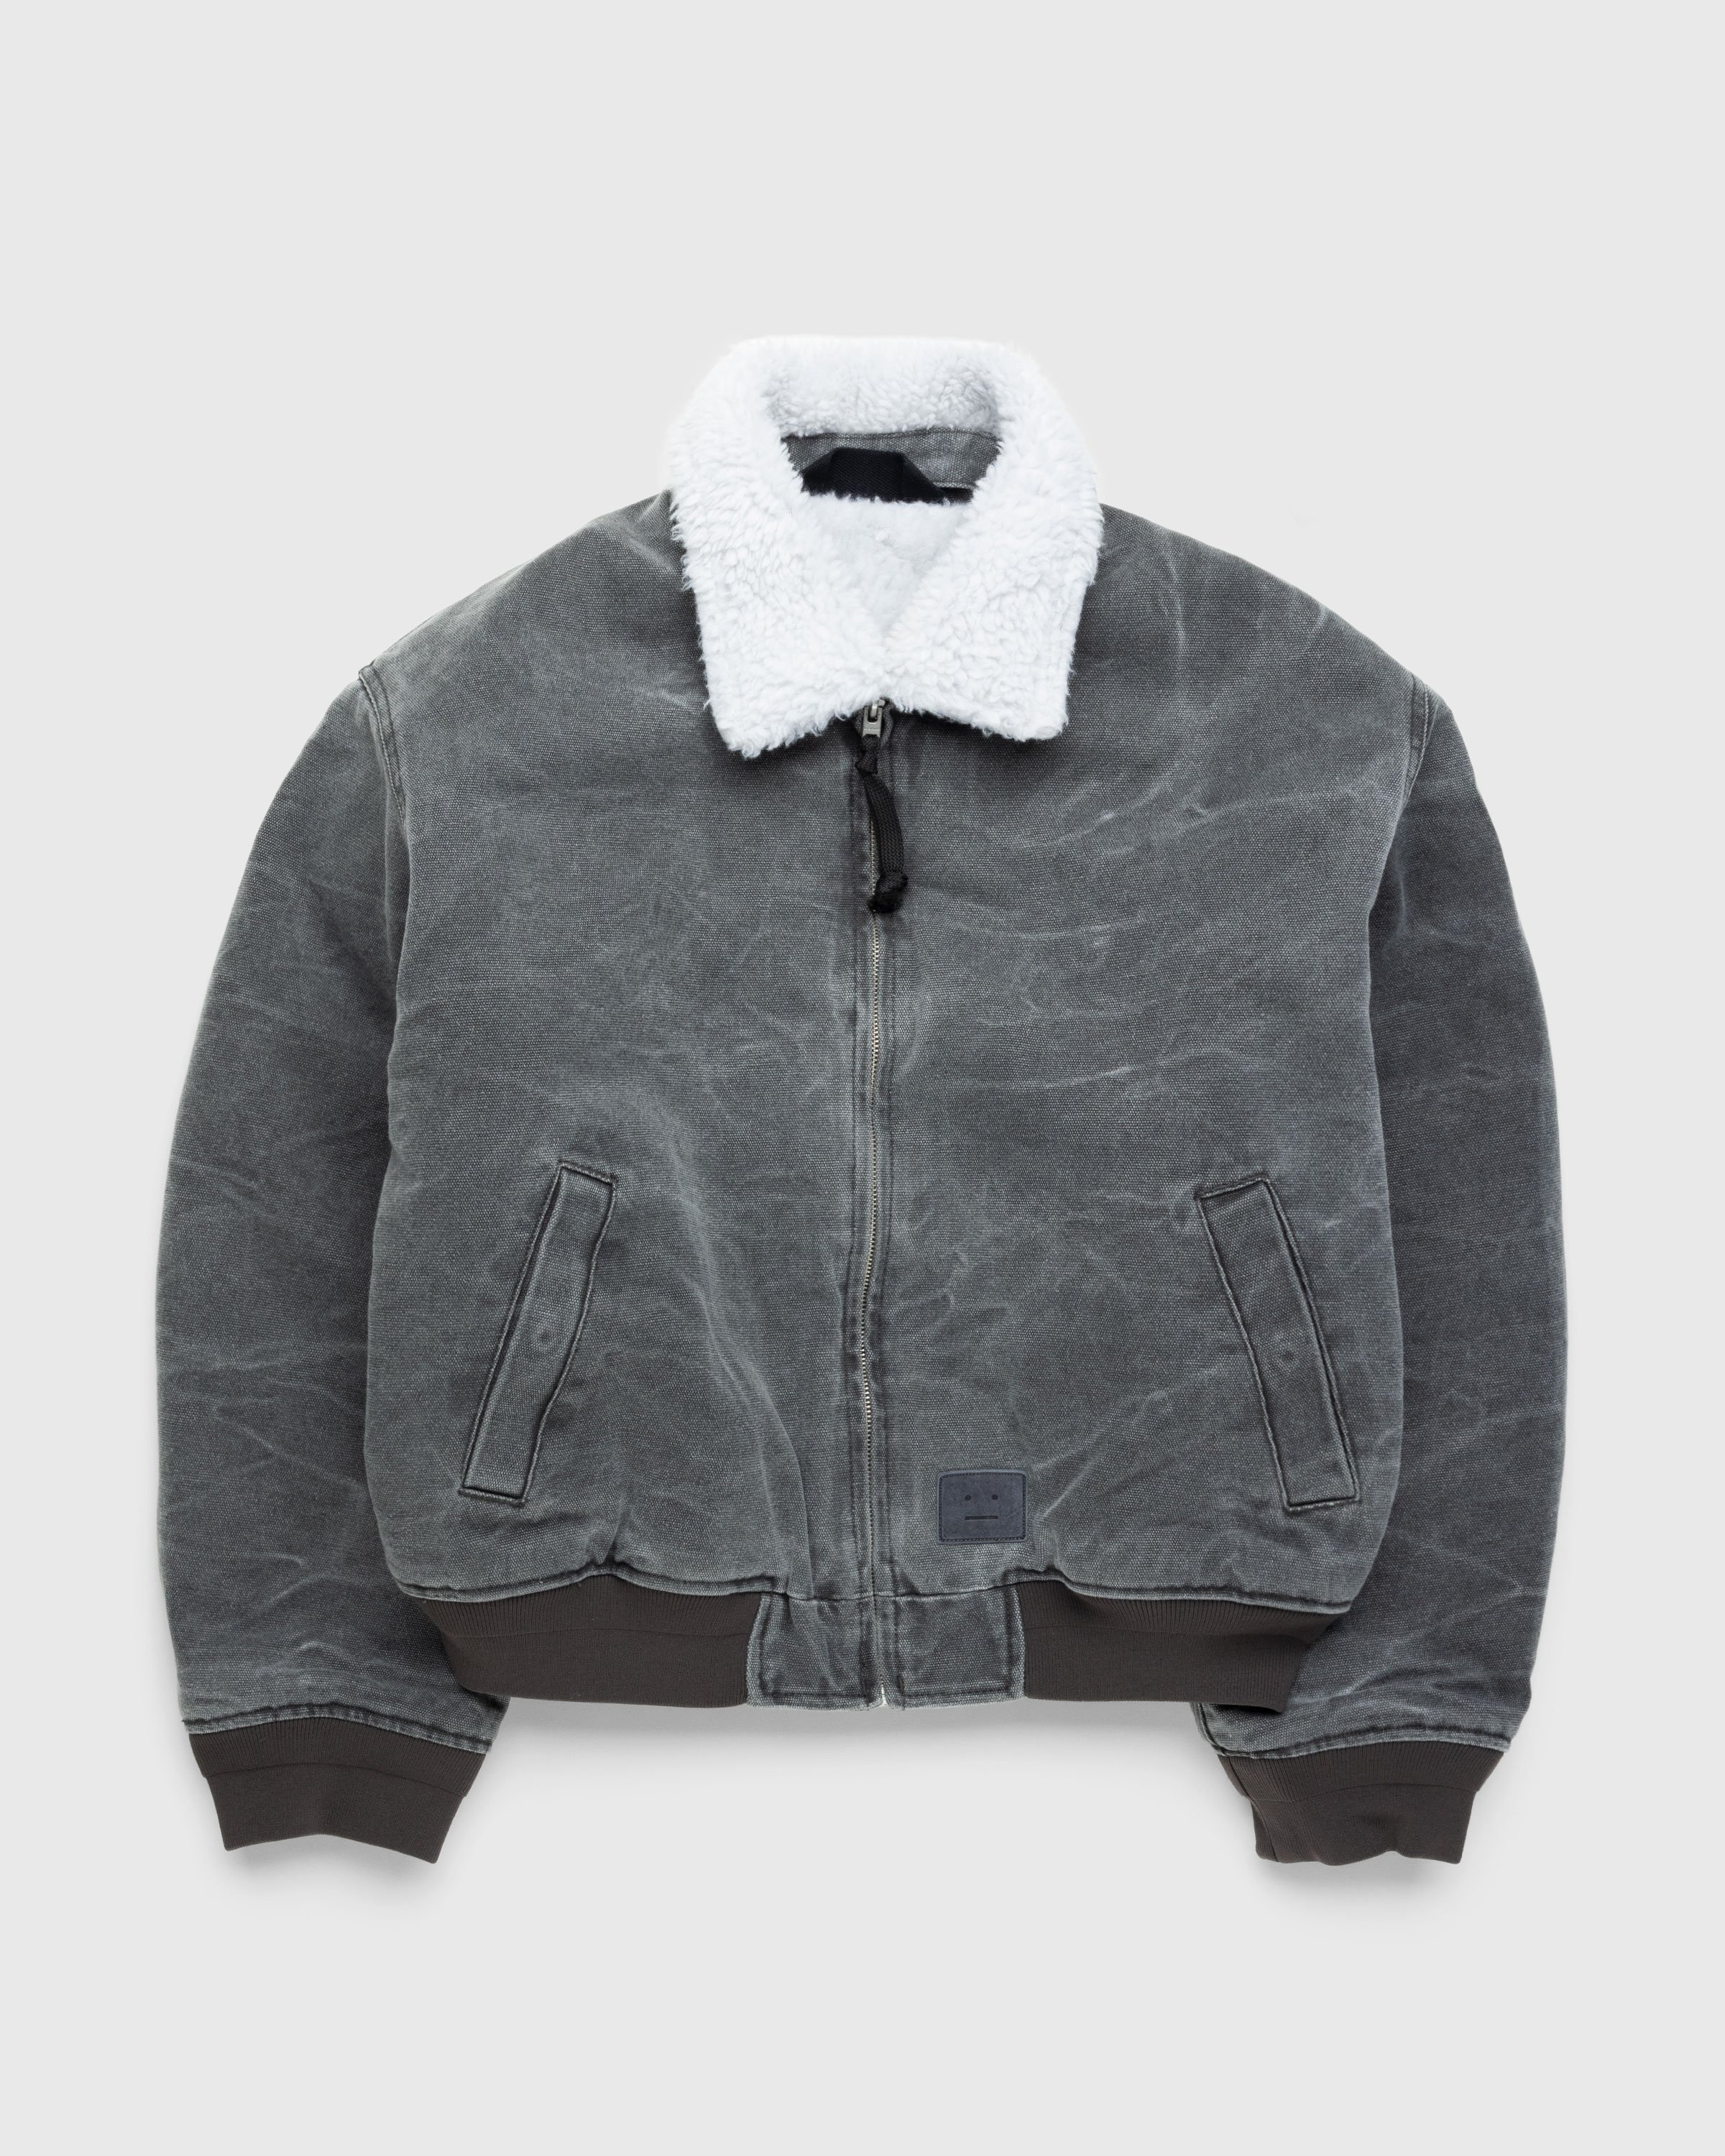 Acne Studios – Cotton Canvas Bomber Jacket Grey - Outerwear - Grey - Image 1